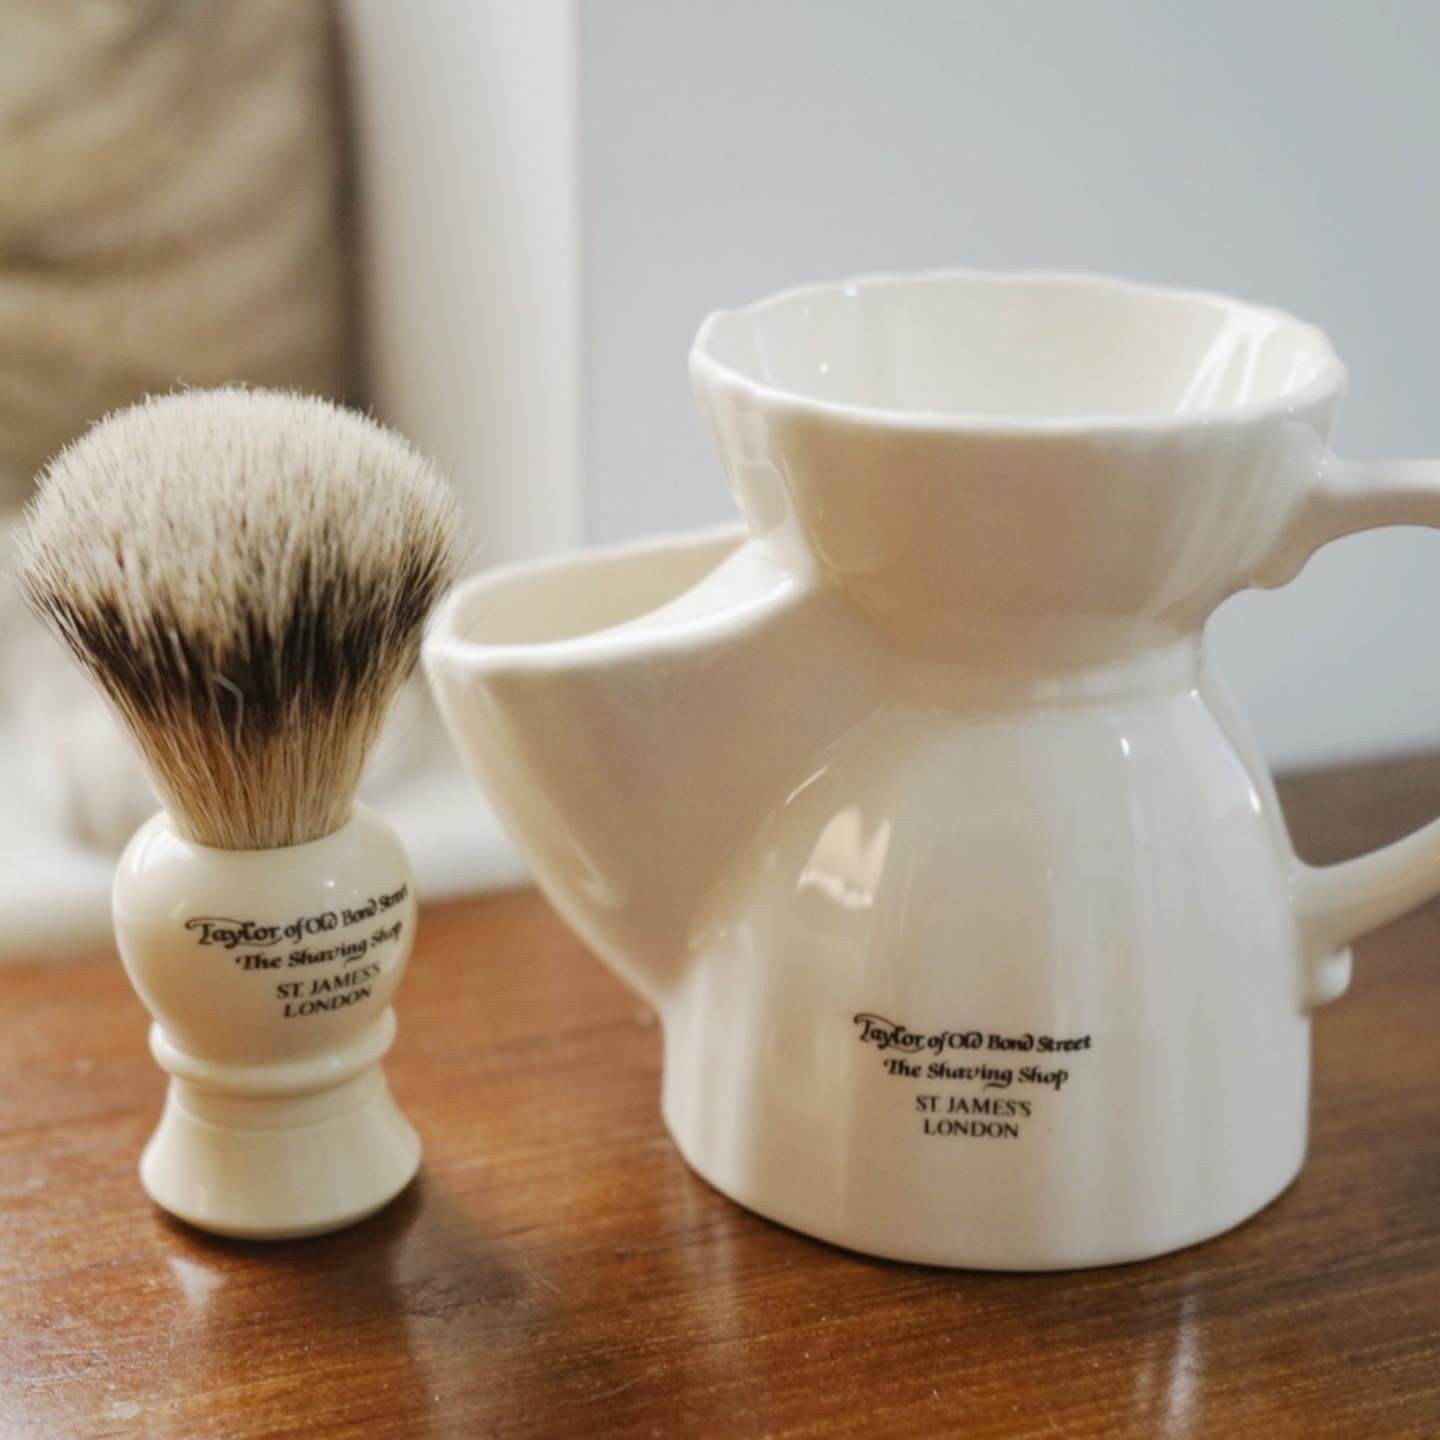 Taylor of Old Bond Street Victorian Ceramic Mug 陶瓷剃鬚皂碗